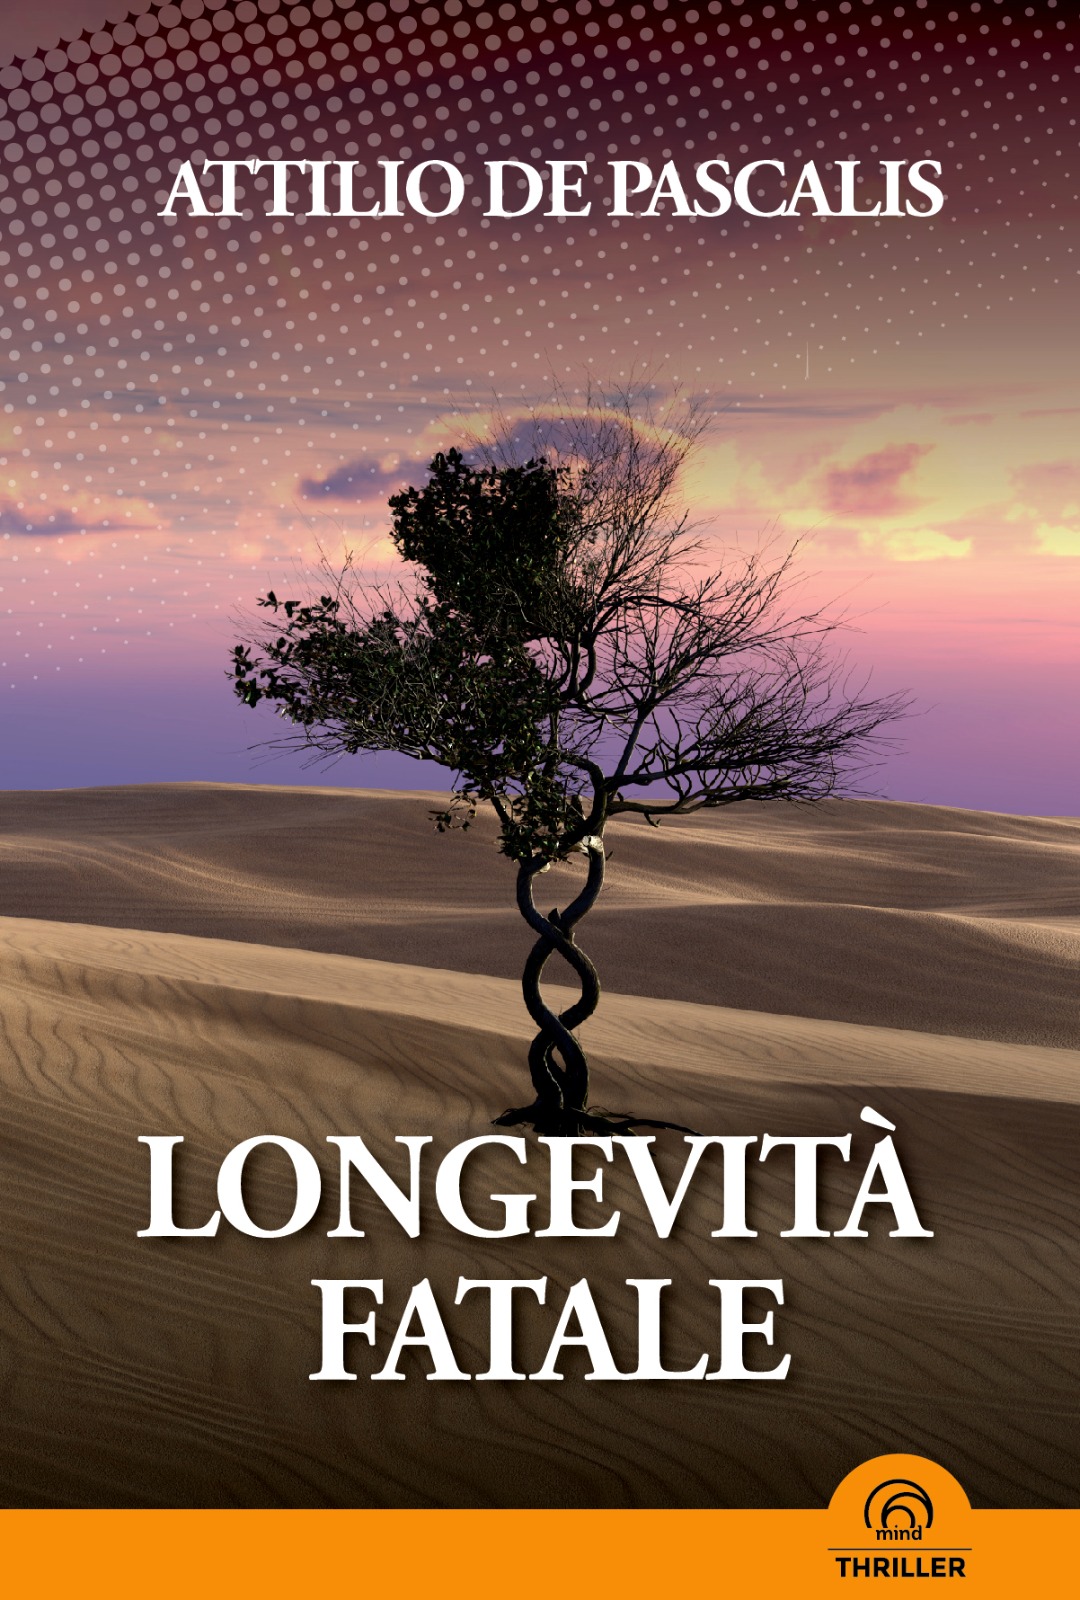 Longevità Fatale, un thriller fra genetica, tecnologie e passioni Longevità Fatale, un thriller fra genetica, tecnologie e passioni
